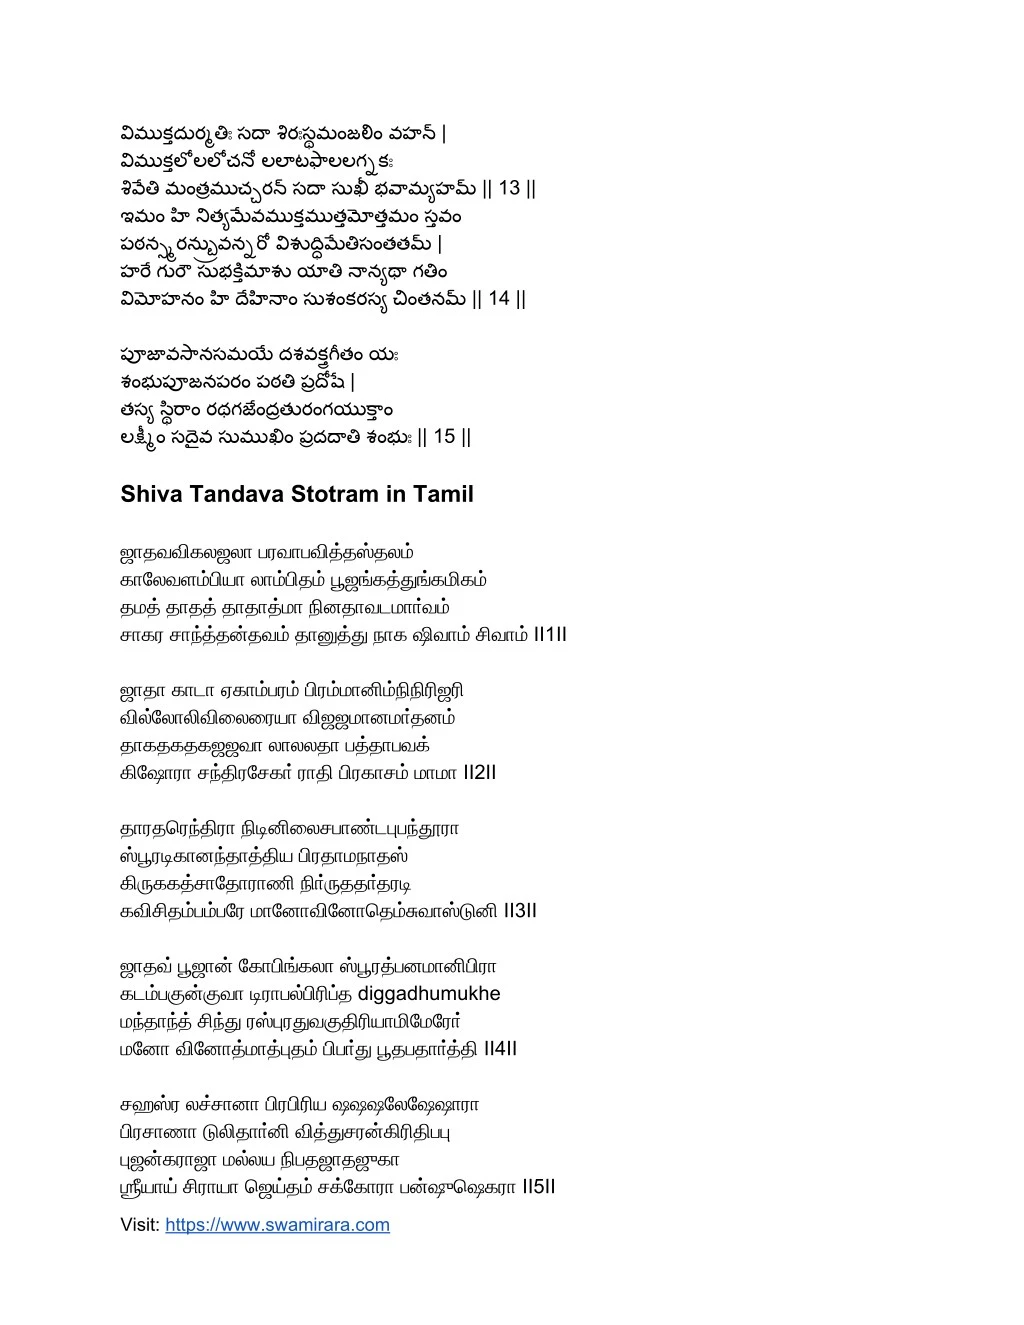 Shiva Tandava Stotram Tamil Mp3 Free Download Shiva tandava stotram original powerful and best trance by : shiva tandava stotram tamil mp3 free